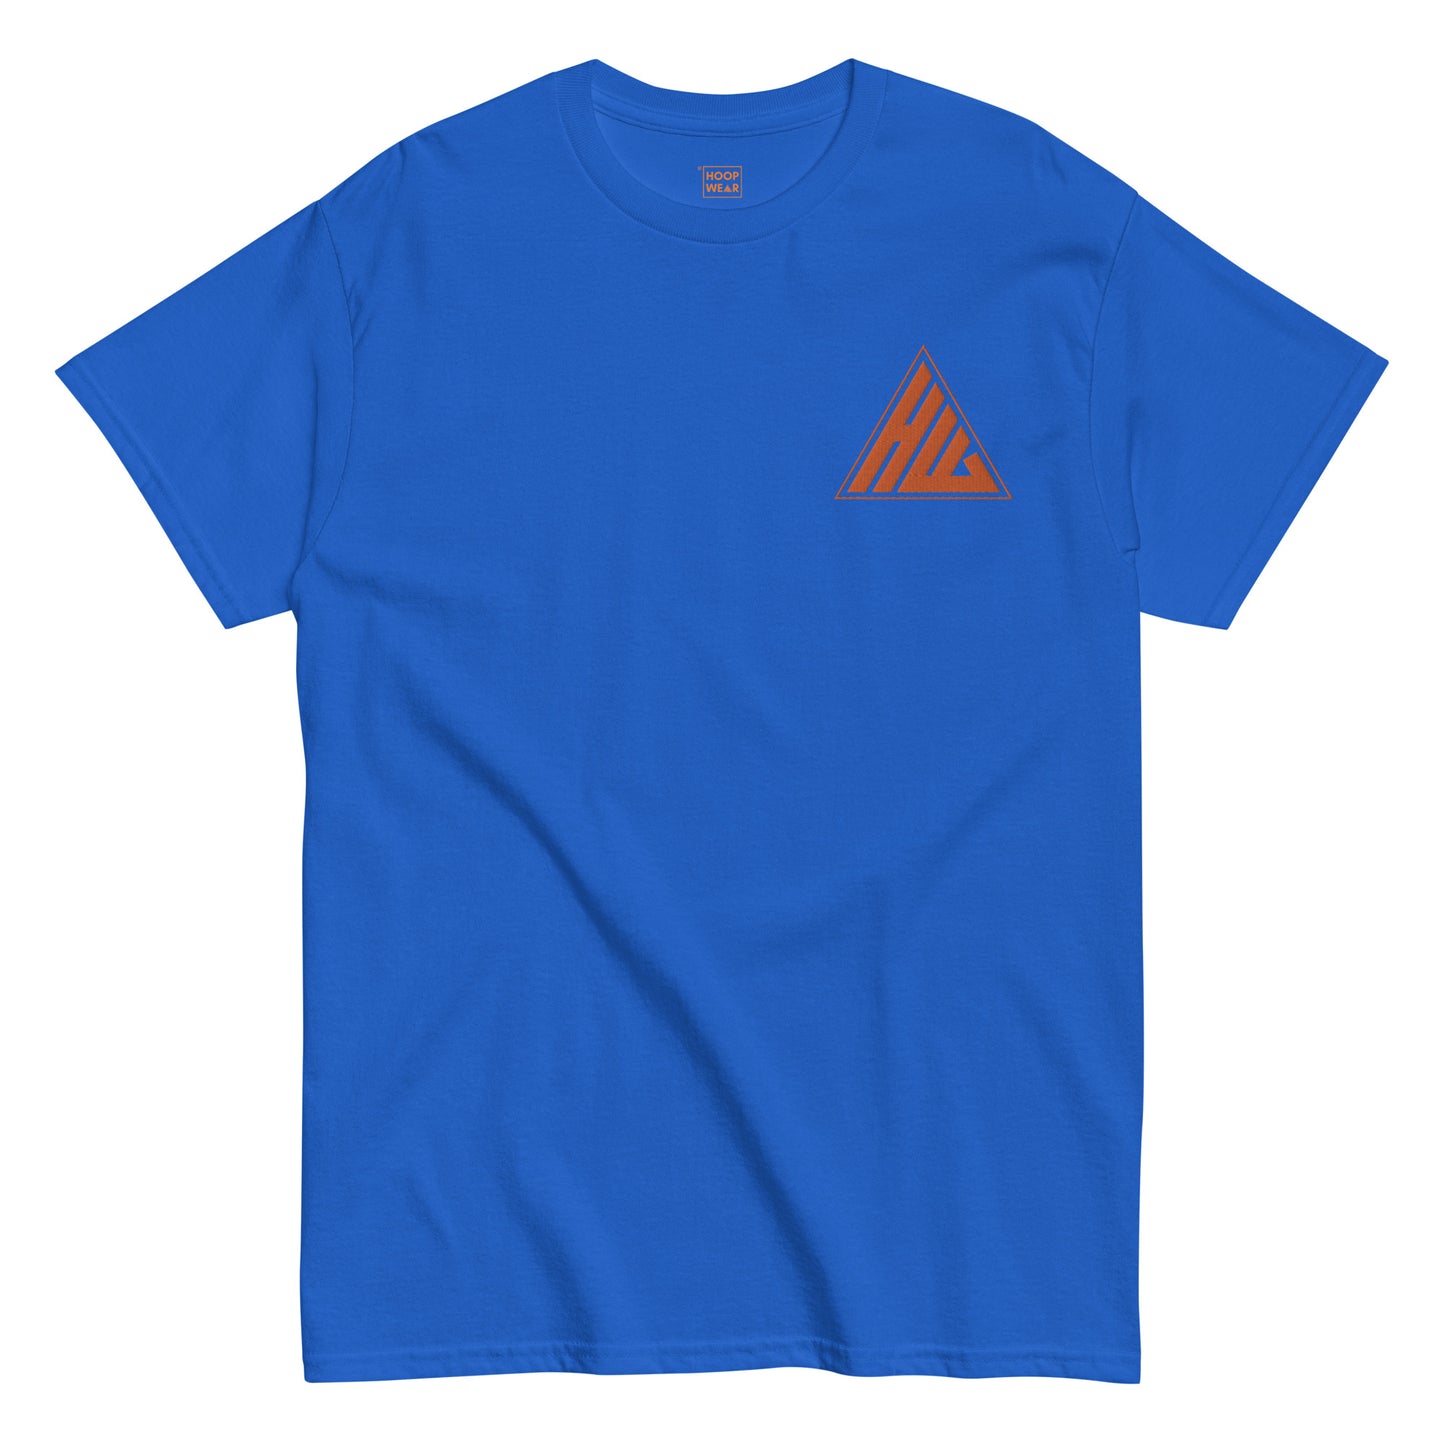 T-shirt “The City That Never Sleeps” Brodé - Bleu